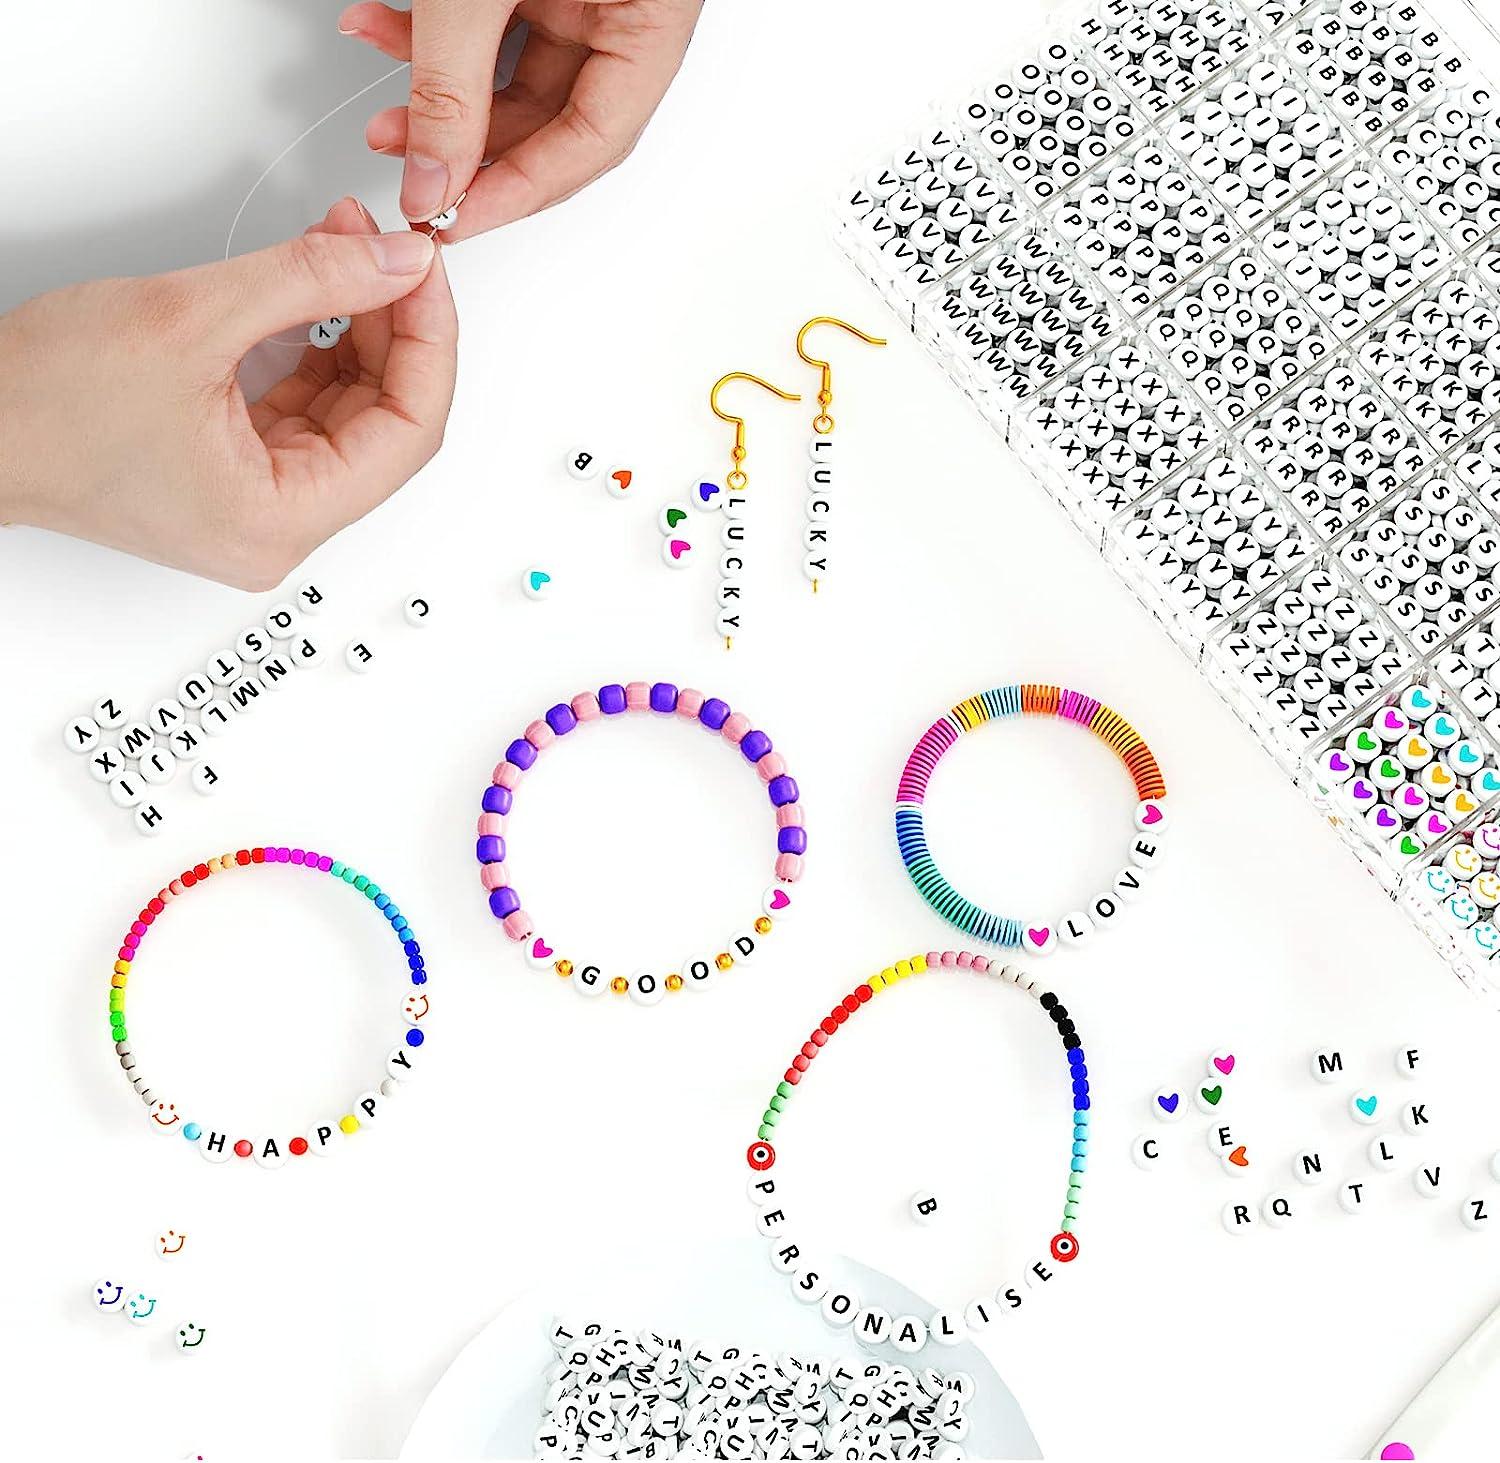 ARTDOT 1400 Pieces Letter Beads Kit, 28 Styles Alphabet Beads